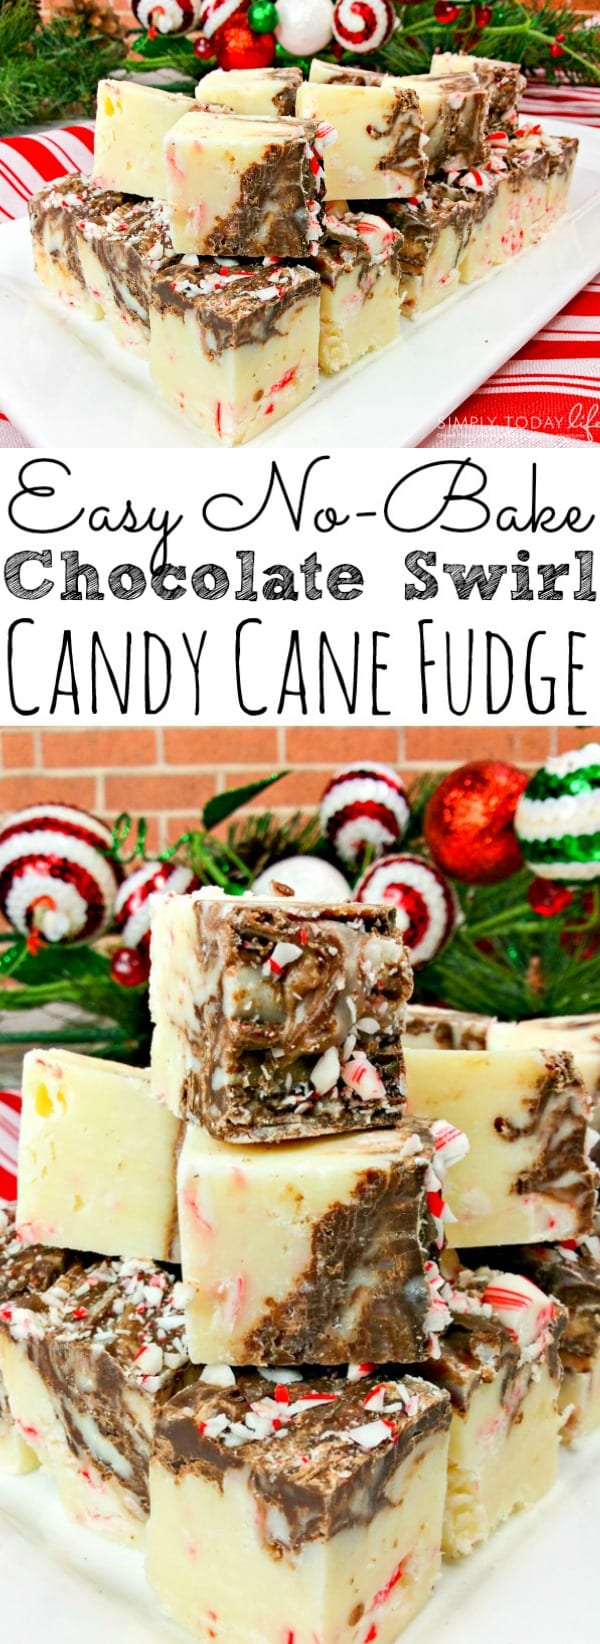 Chocolate Swirl Candy Cane Fudge